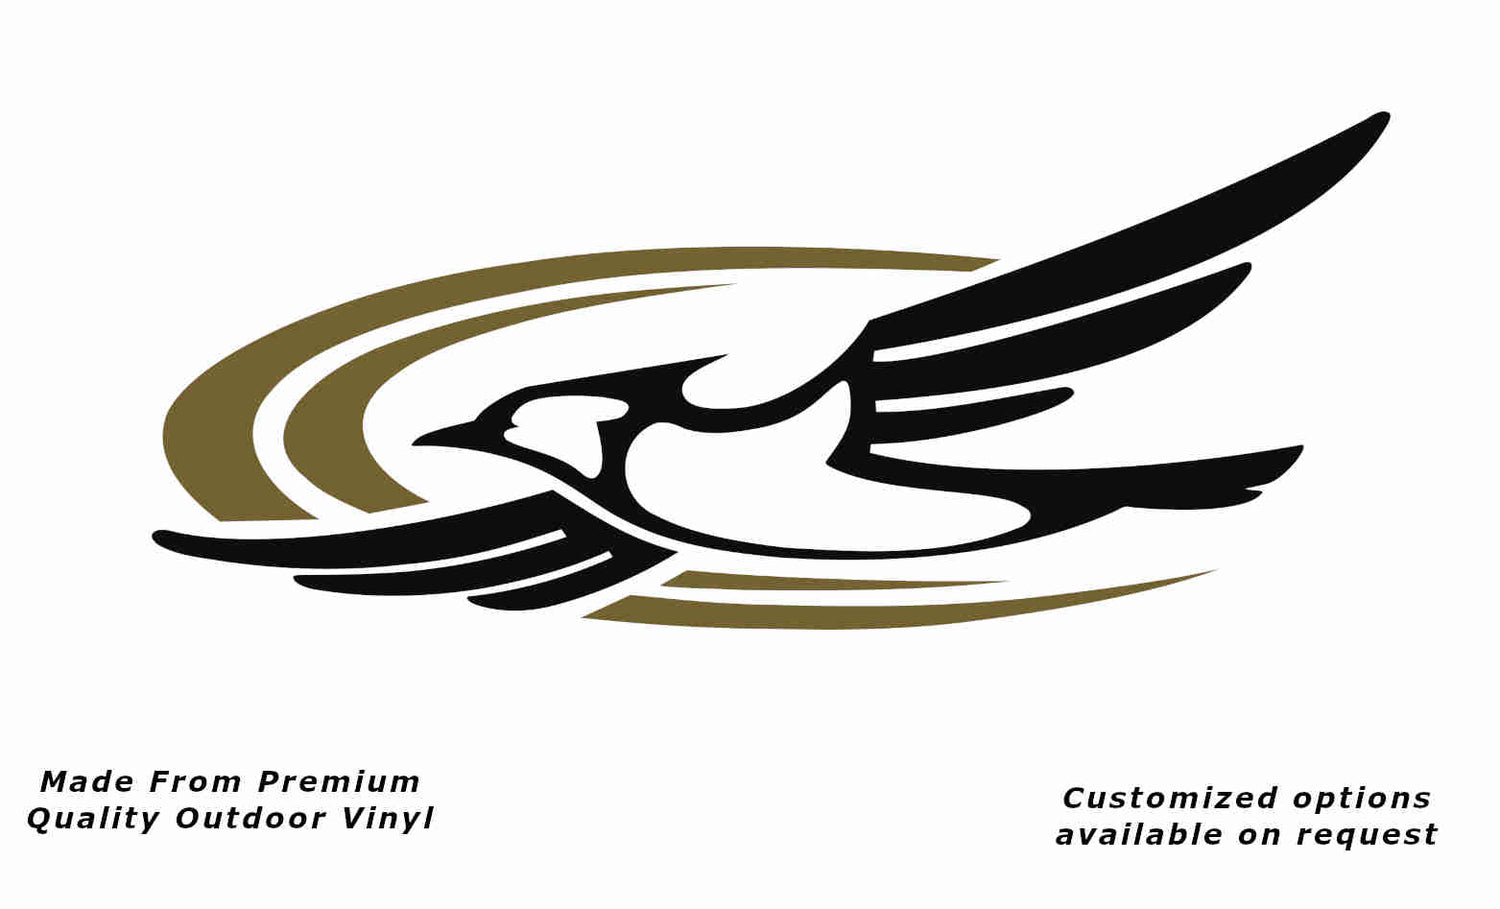 Jayco bird 2000-2010 left caravan replacement vinyl decal sticker in black with a gold crescent.